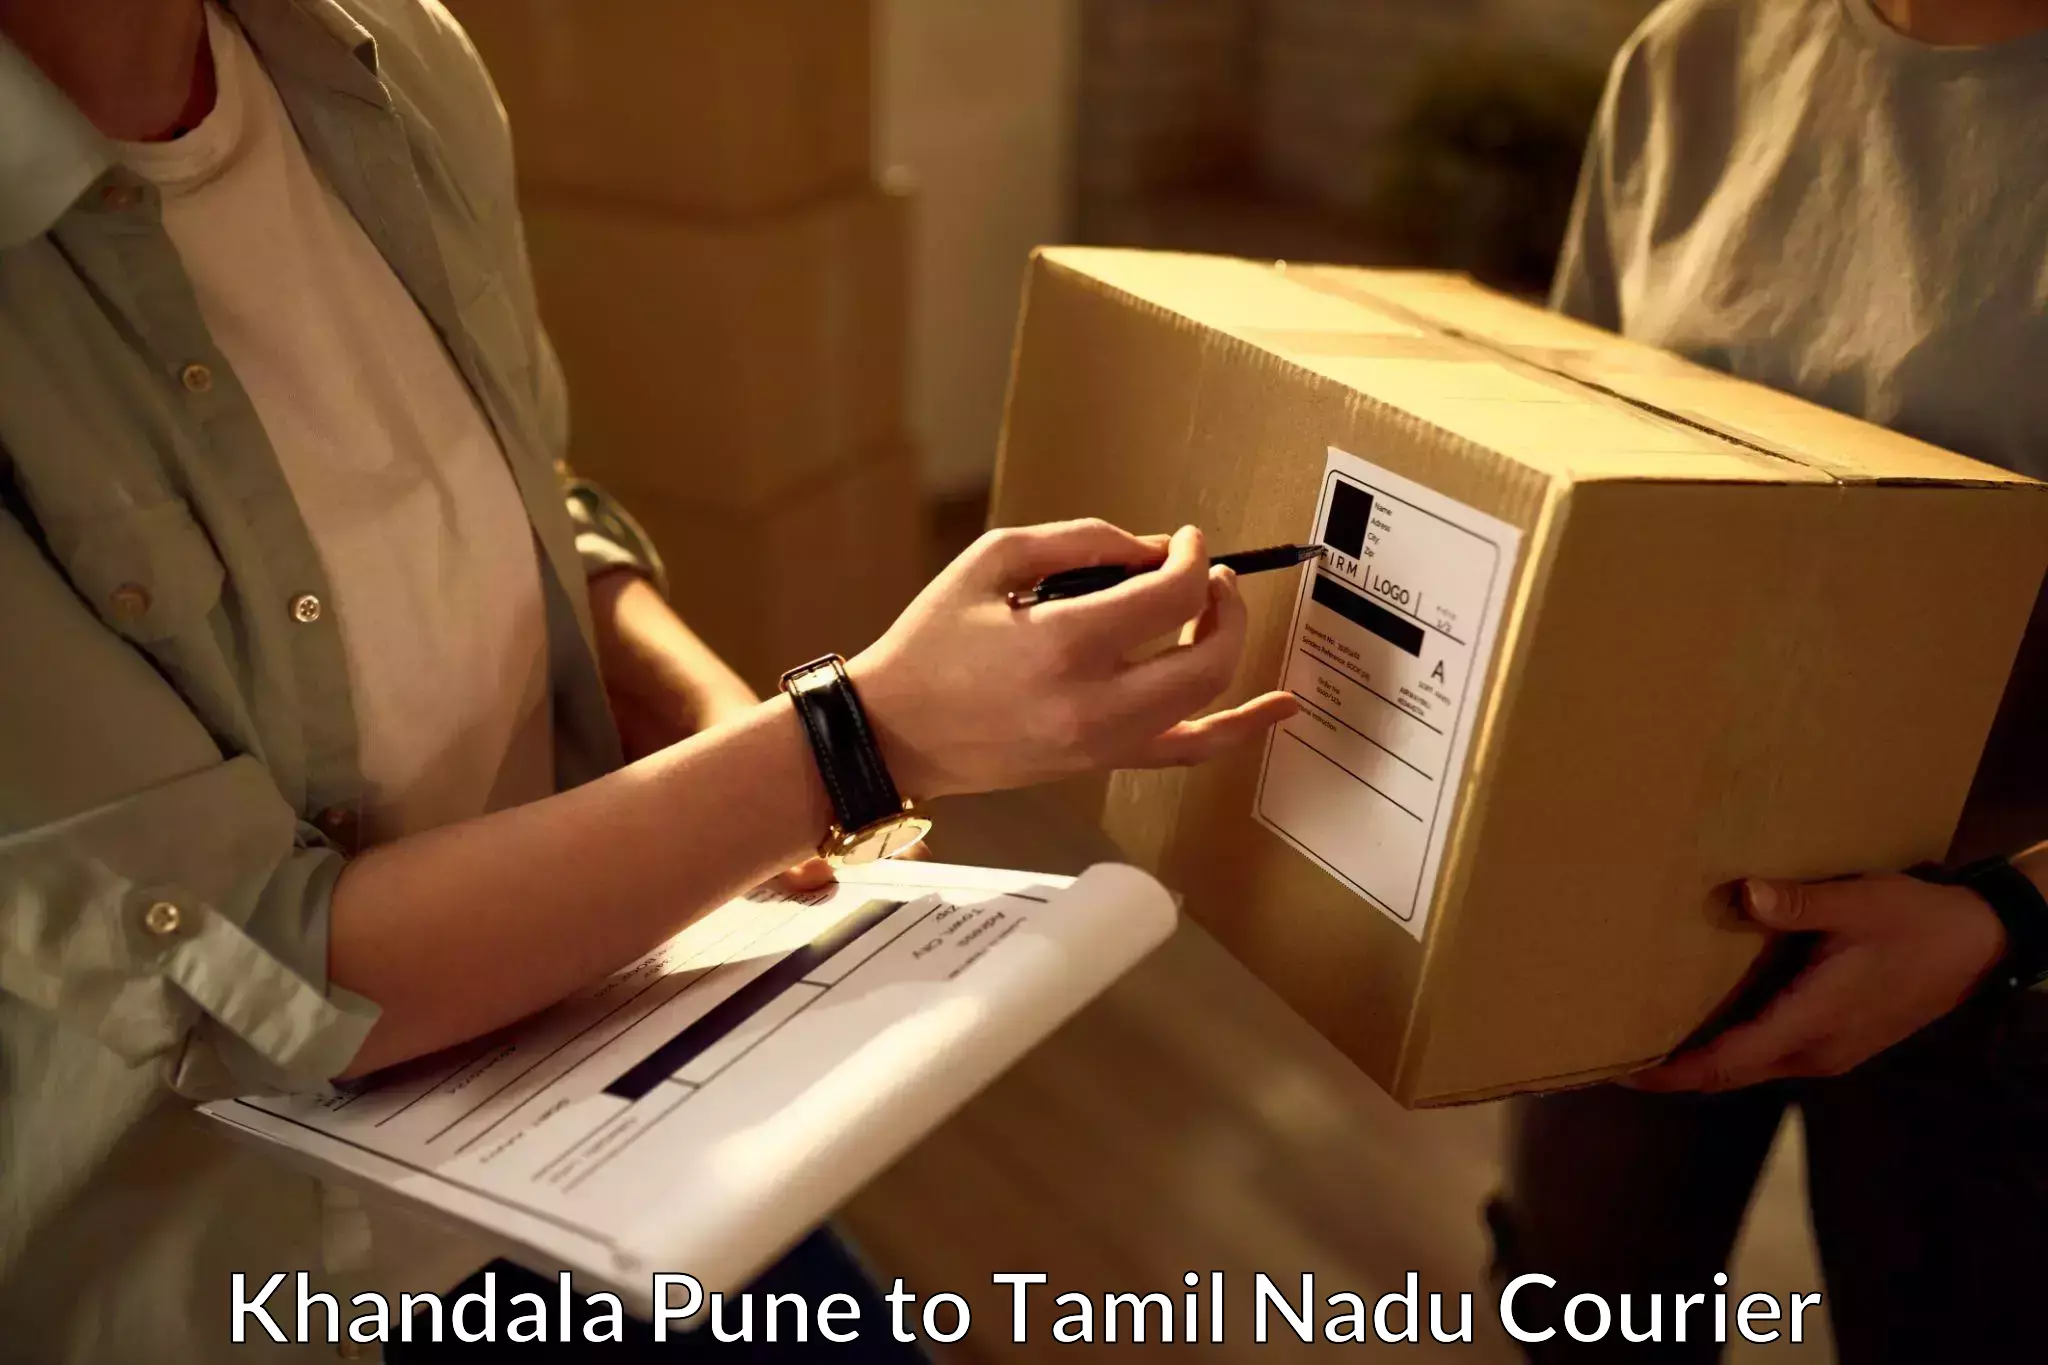 On-call courier service Khandala Pune to Sankarankoil